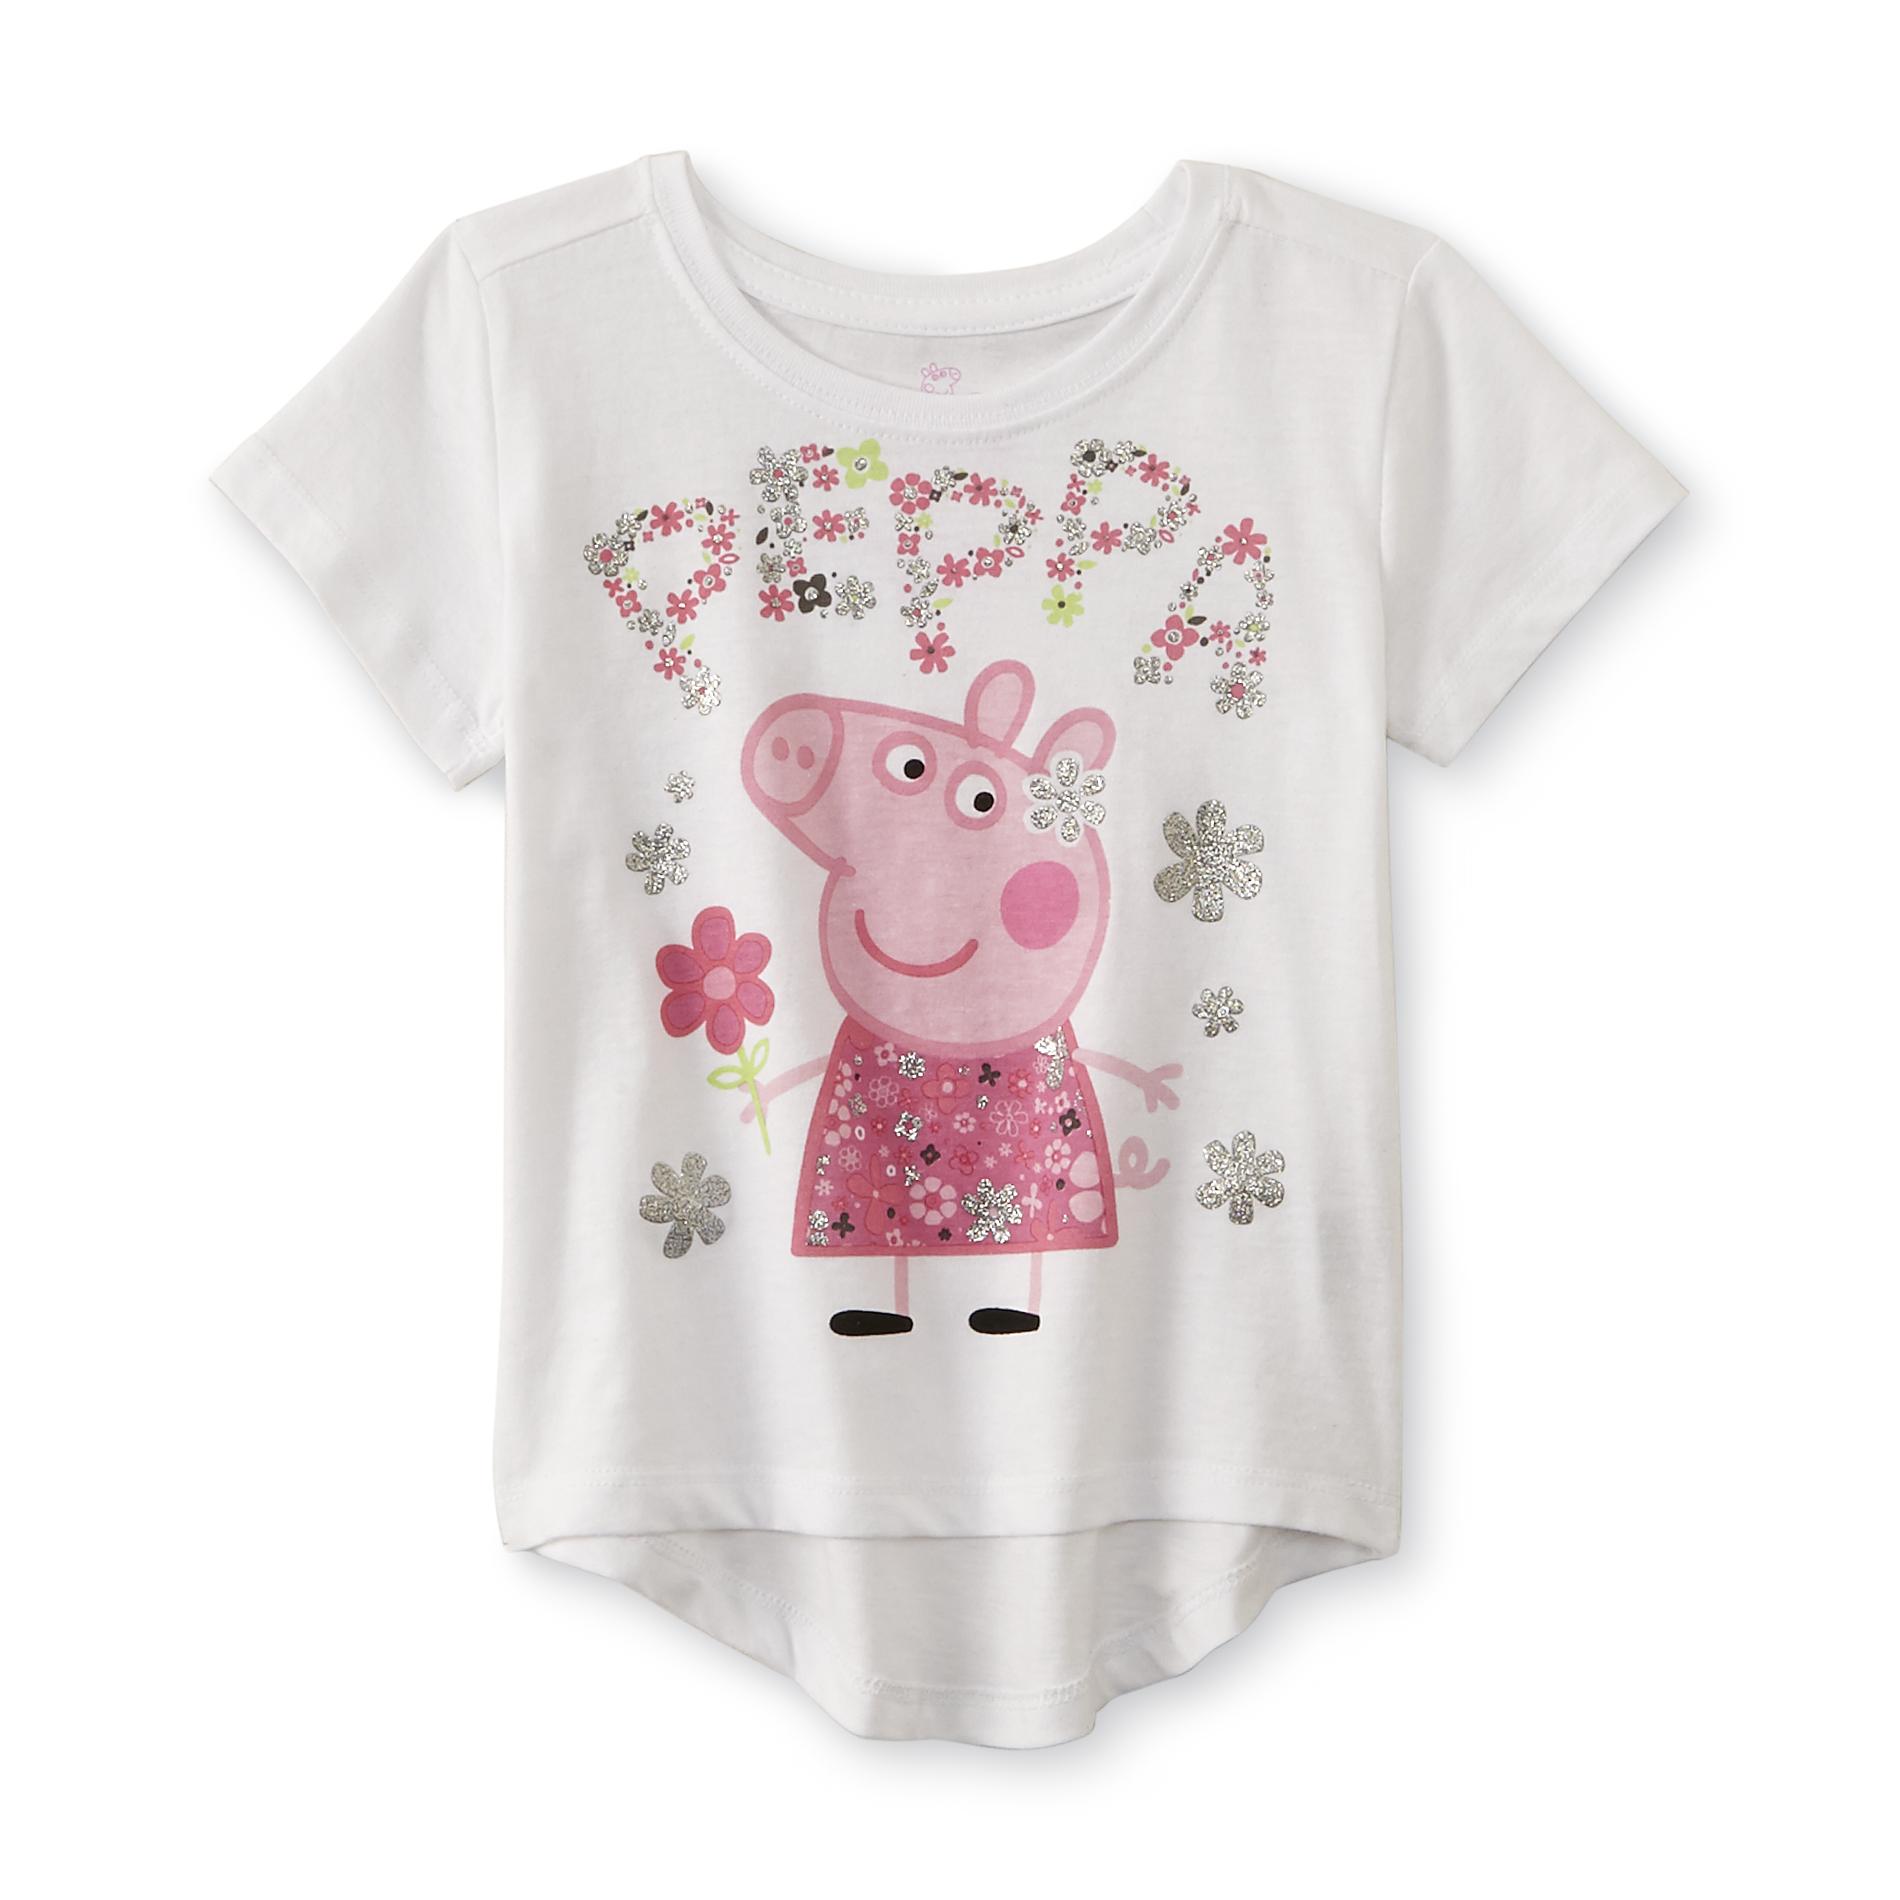 Peppa Pig Toddler Girl's High-Low Top